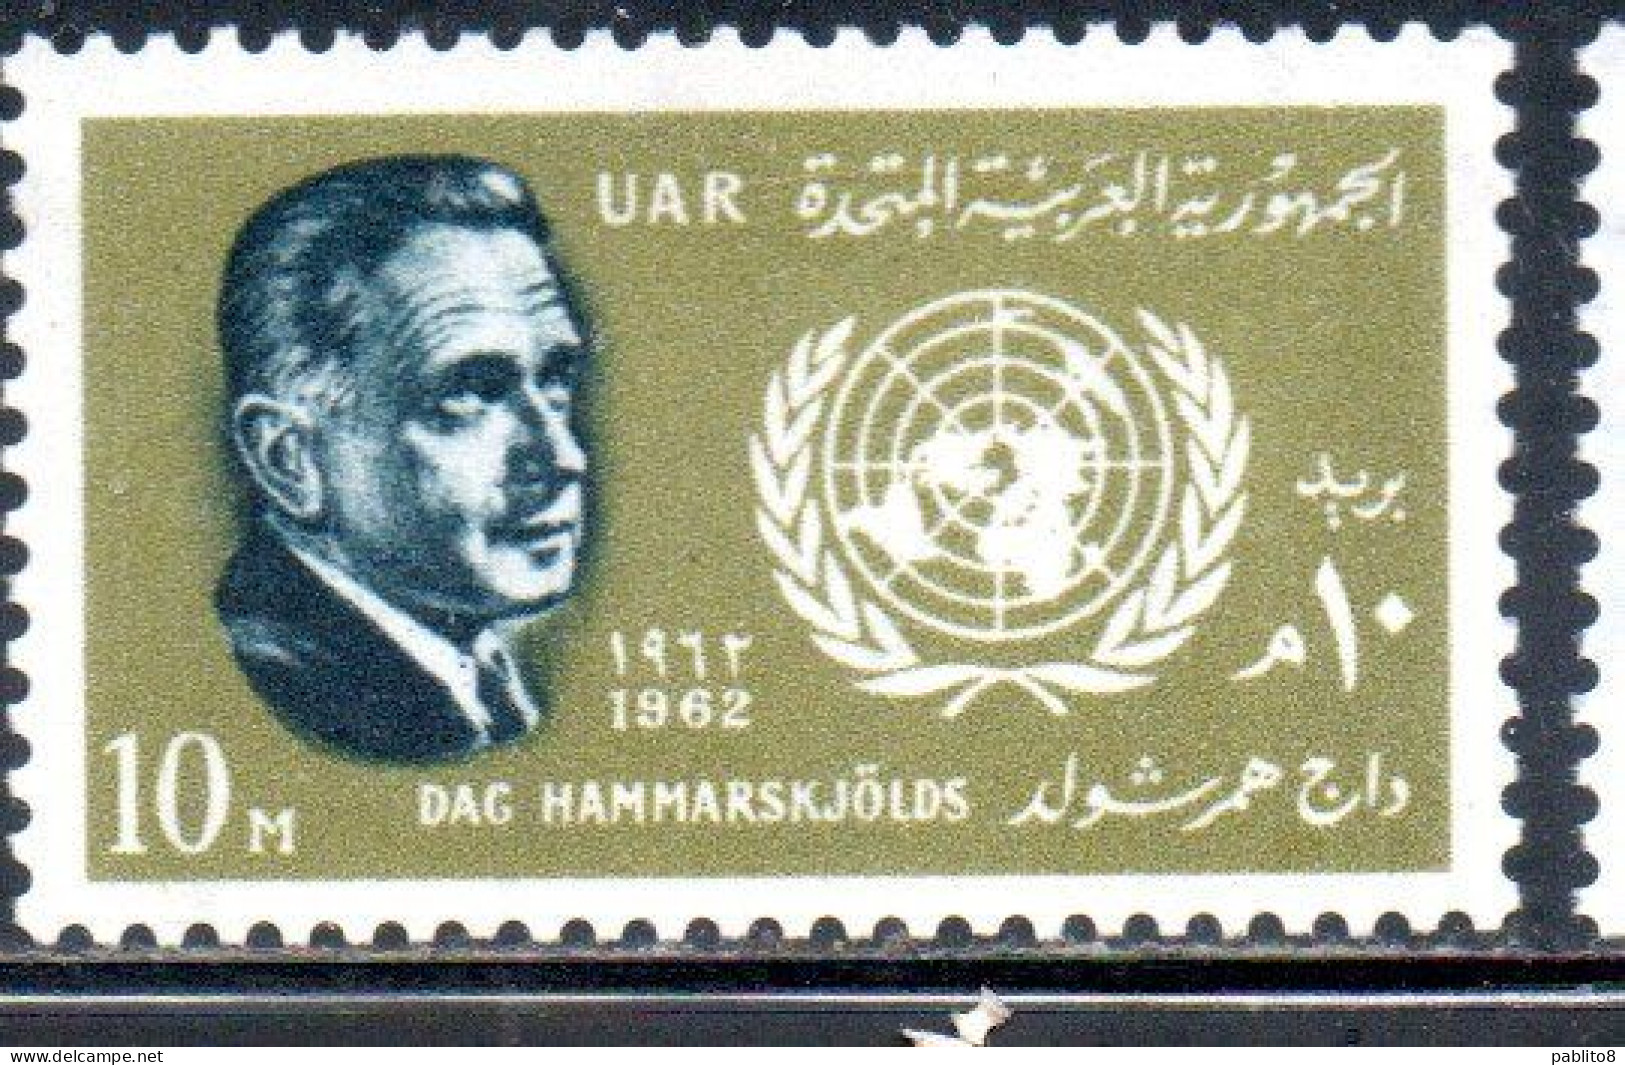 UAR EGYPT EGITTO 1962 DAG HAMMARSKJOLD SECRETARY GENERAL OF THE UN ONU 10m MH - Ongebruikt